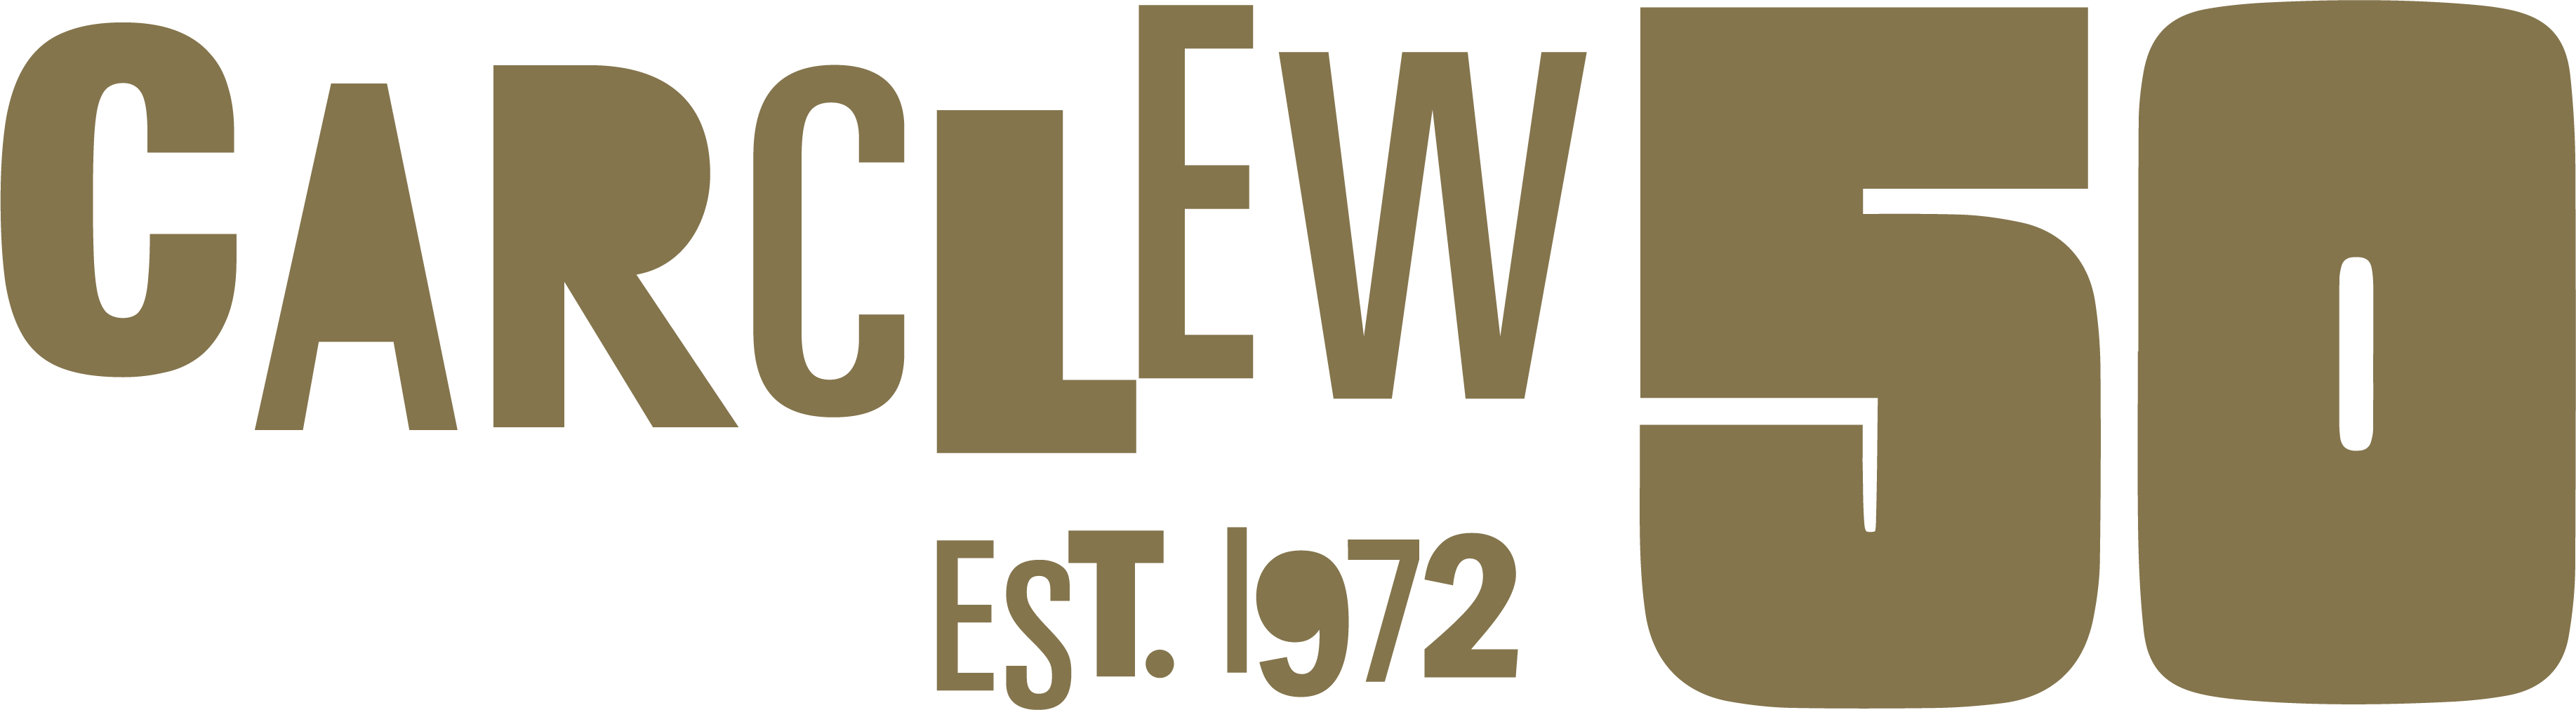 Carclew logo